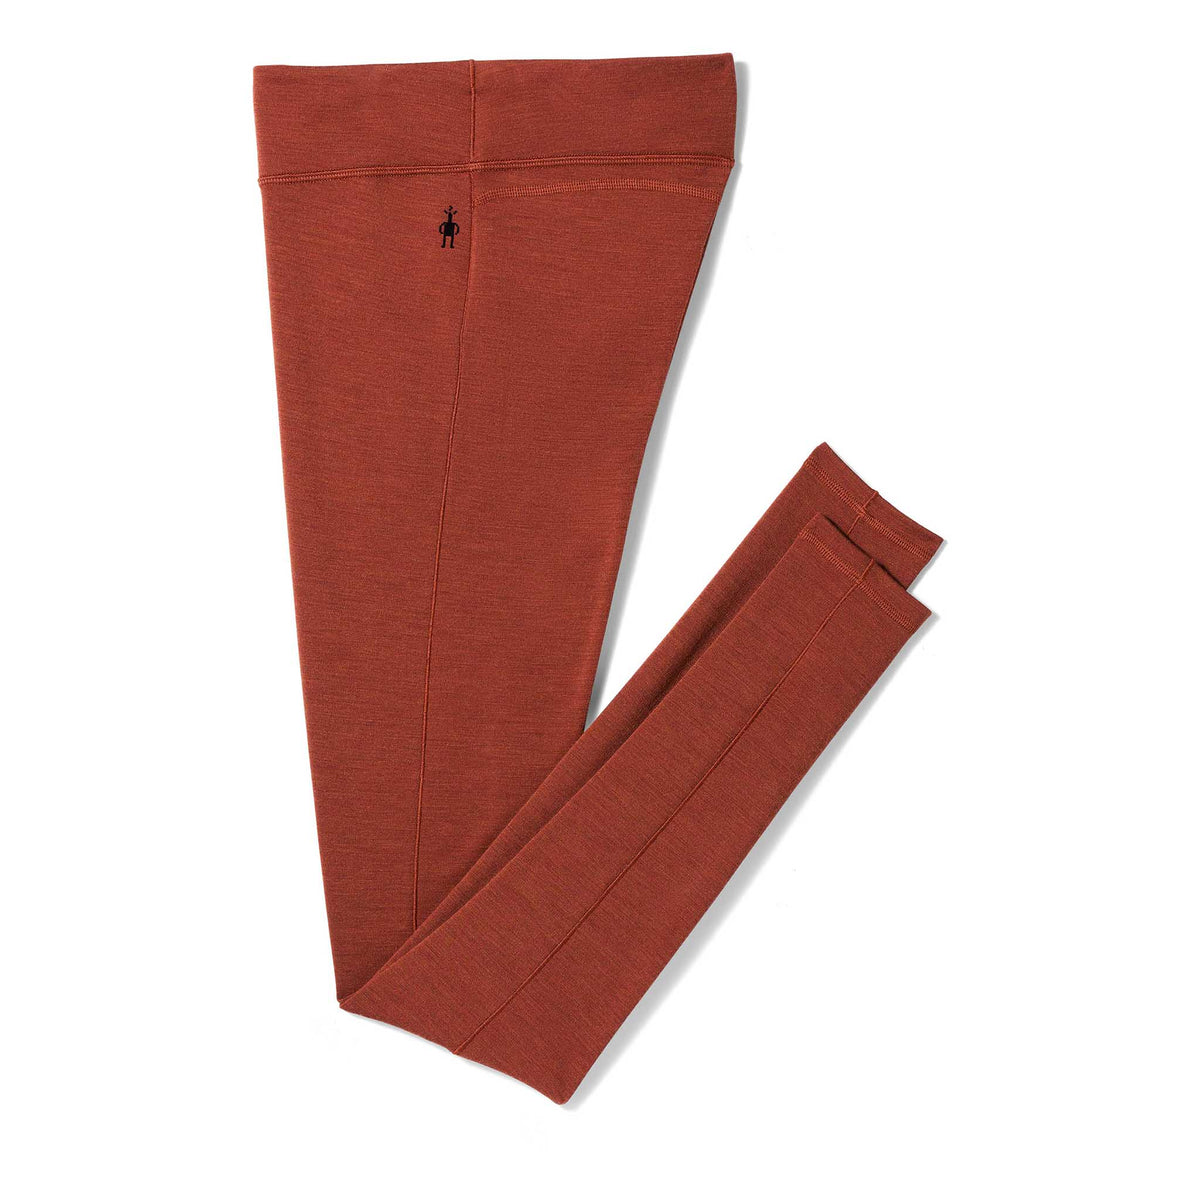 Smartwool Merino 250 pantalon base layer femme - pacane / brun chiné